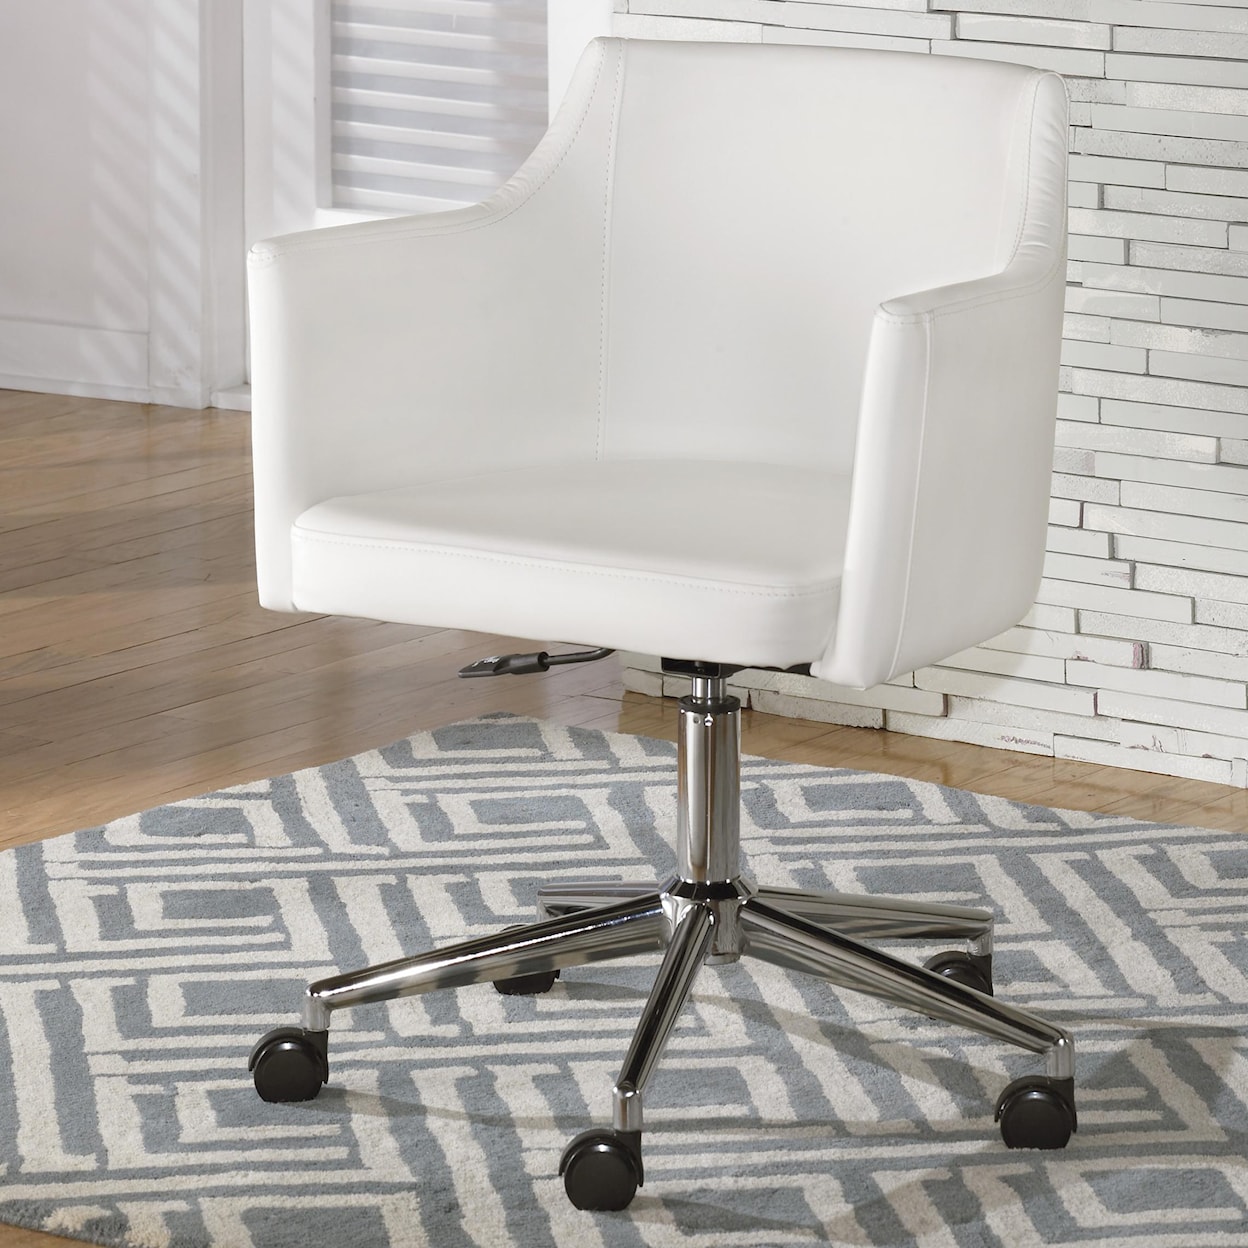 Benchcraft Baraga Home Office Swivel Desk Chair